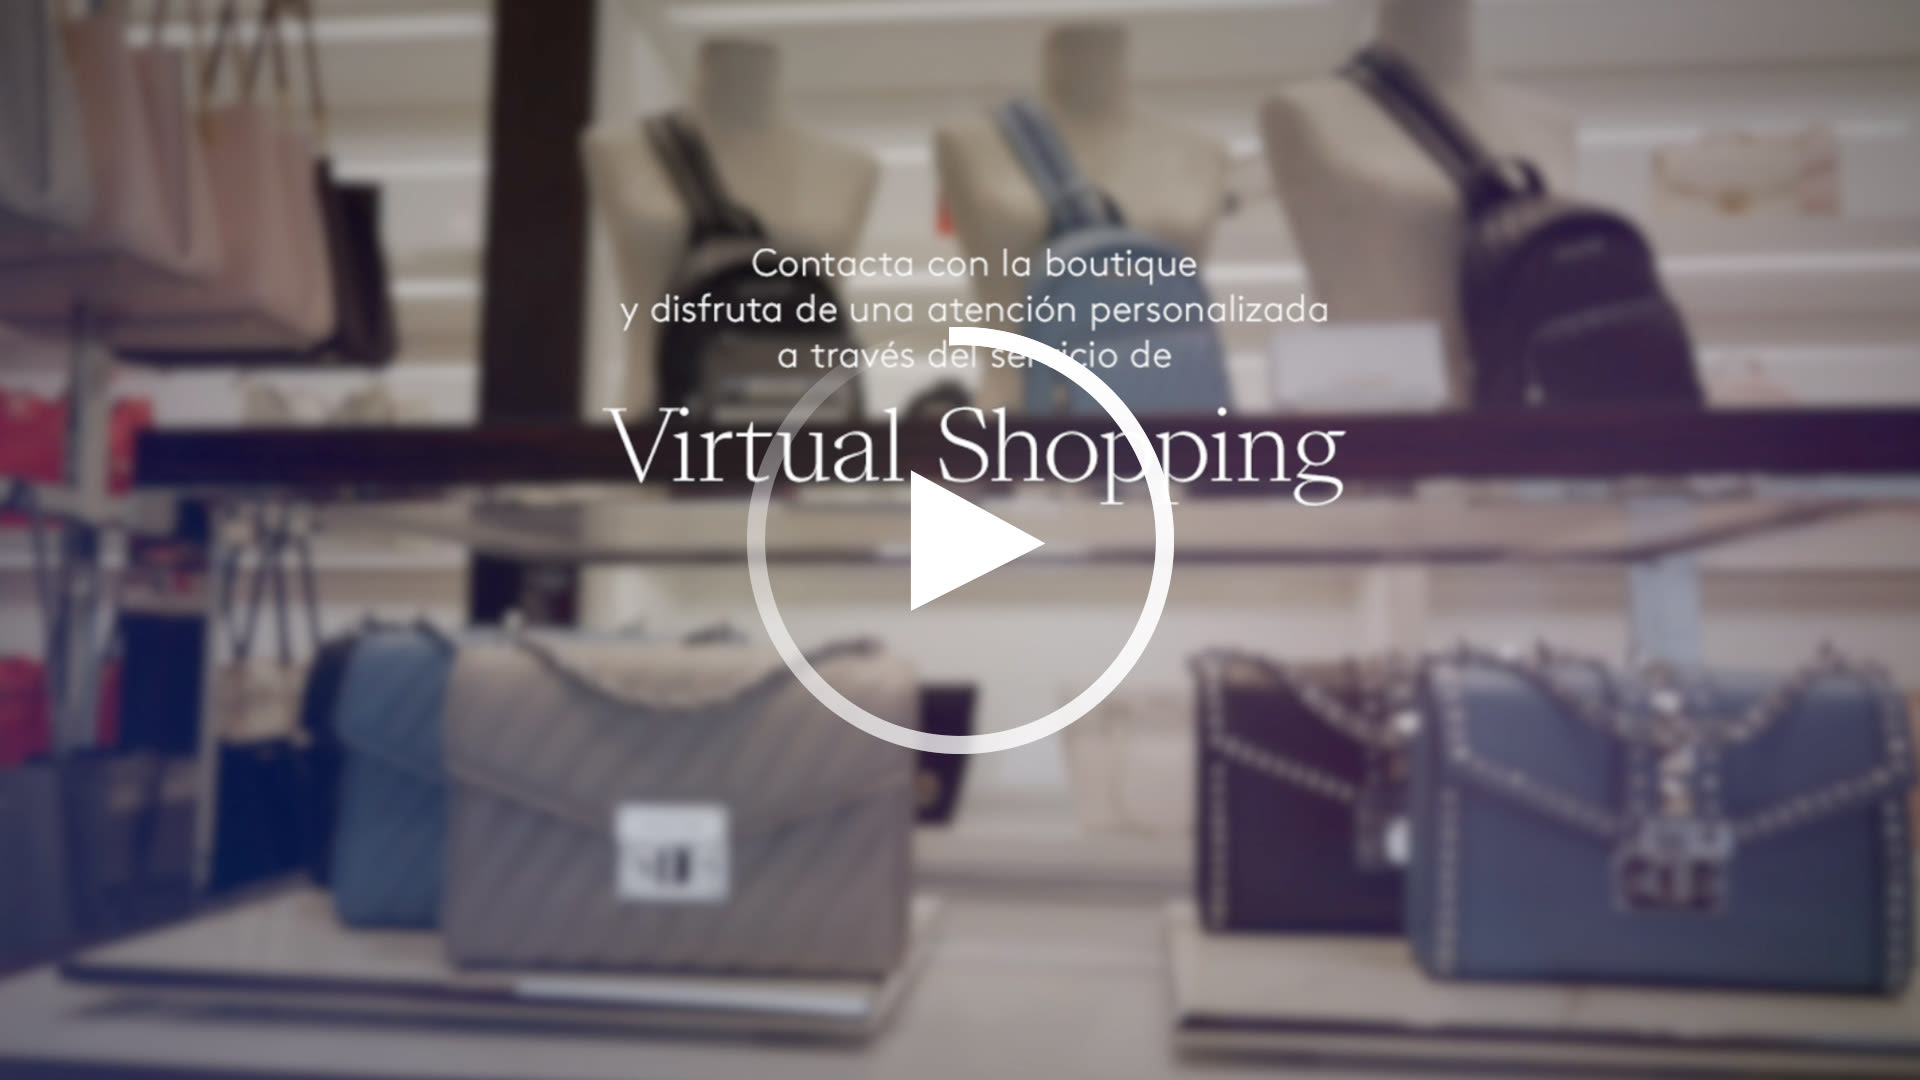 virtual shopping brand event video michael kors